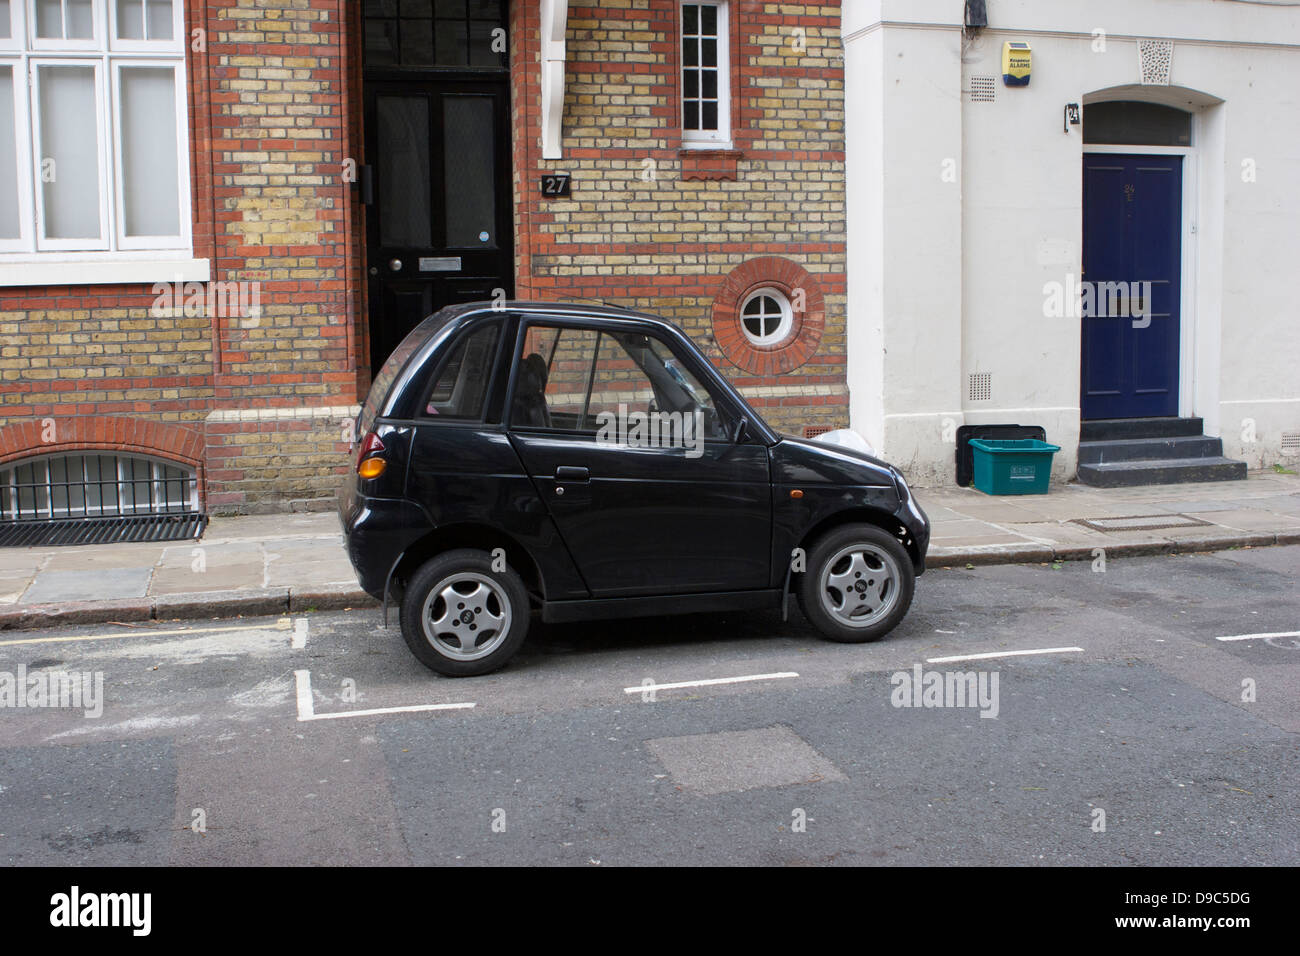 Reva G-Wiz parked in a street in London Stock Photo